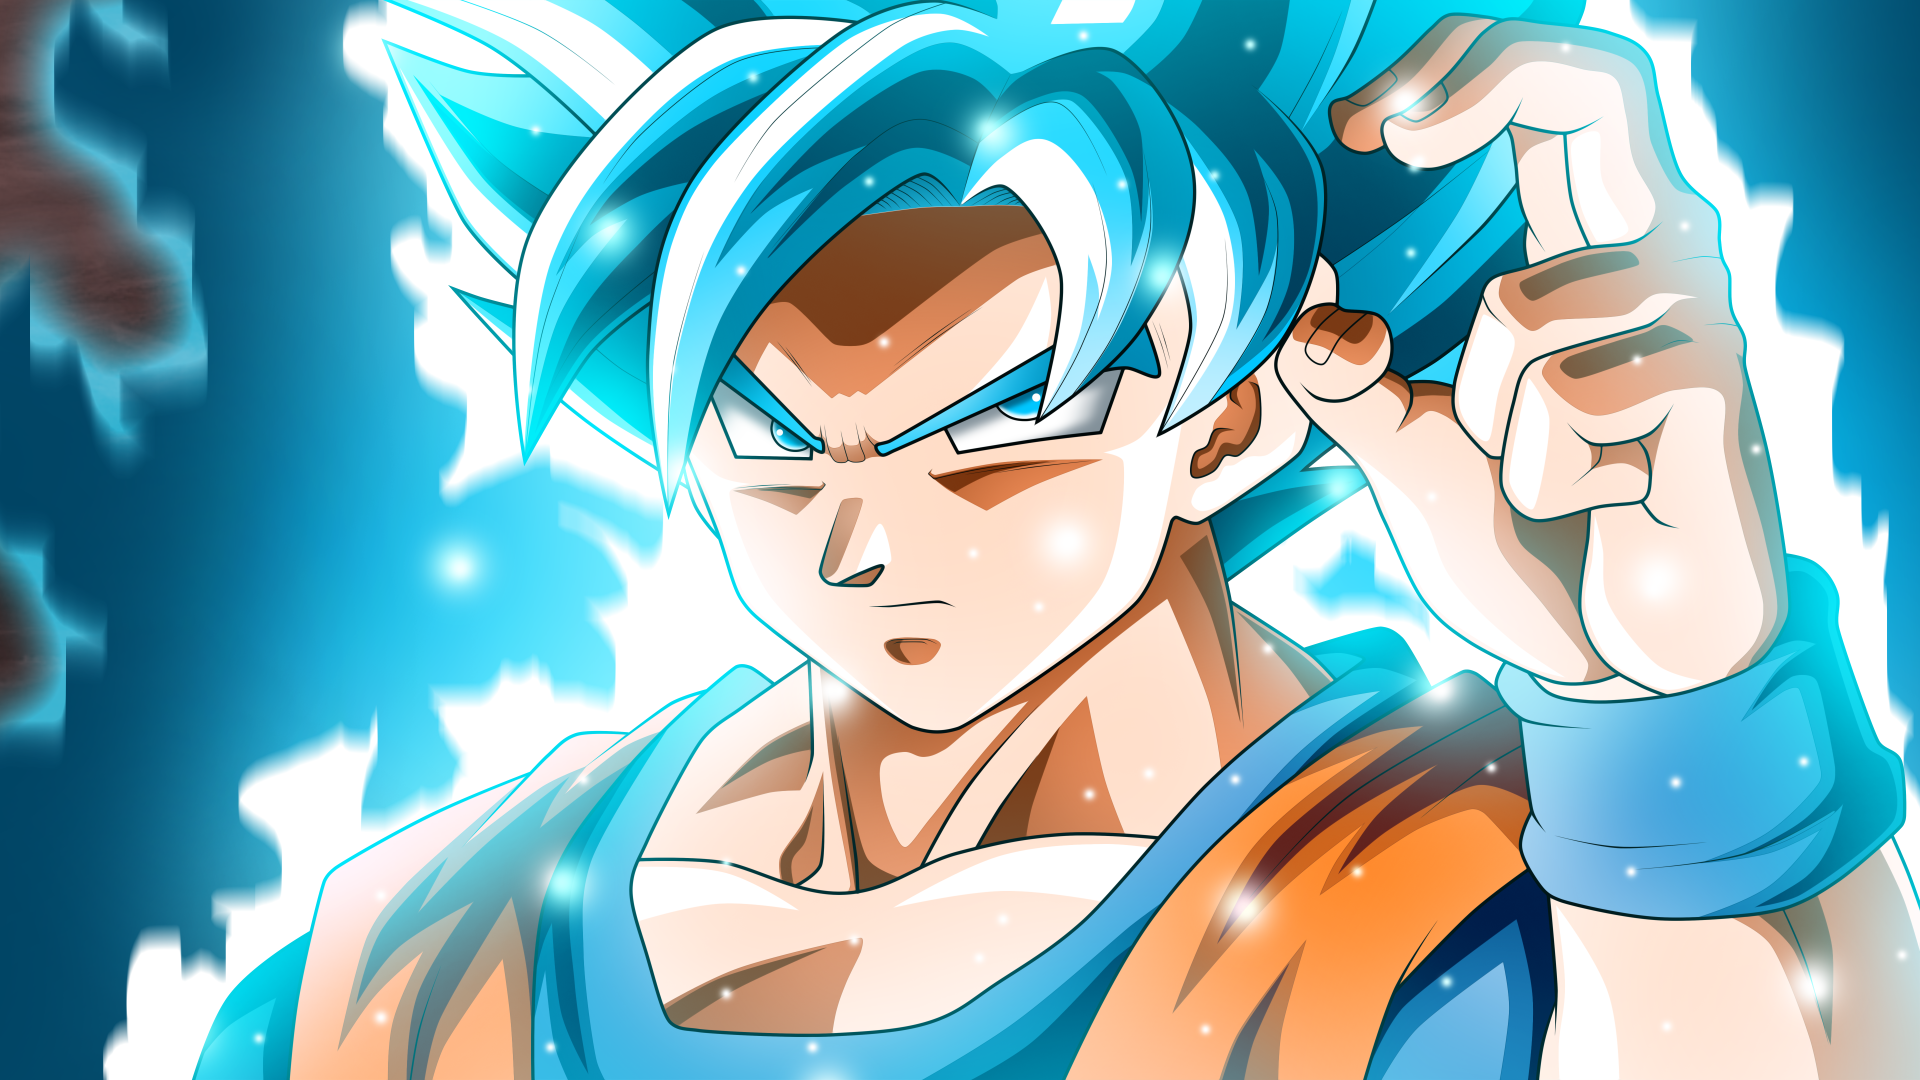 Goku's Blue Hair Transformation - wide 8